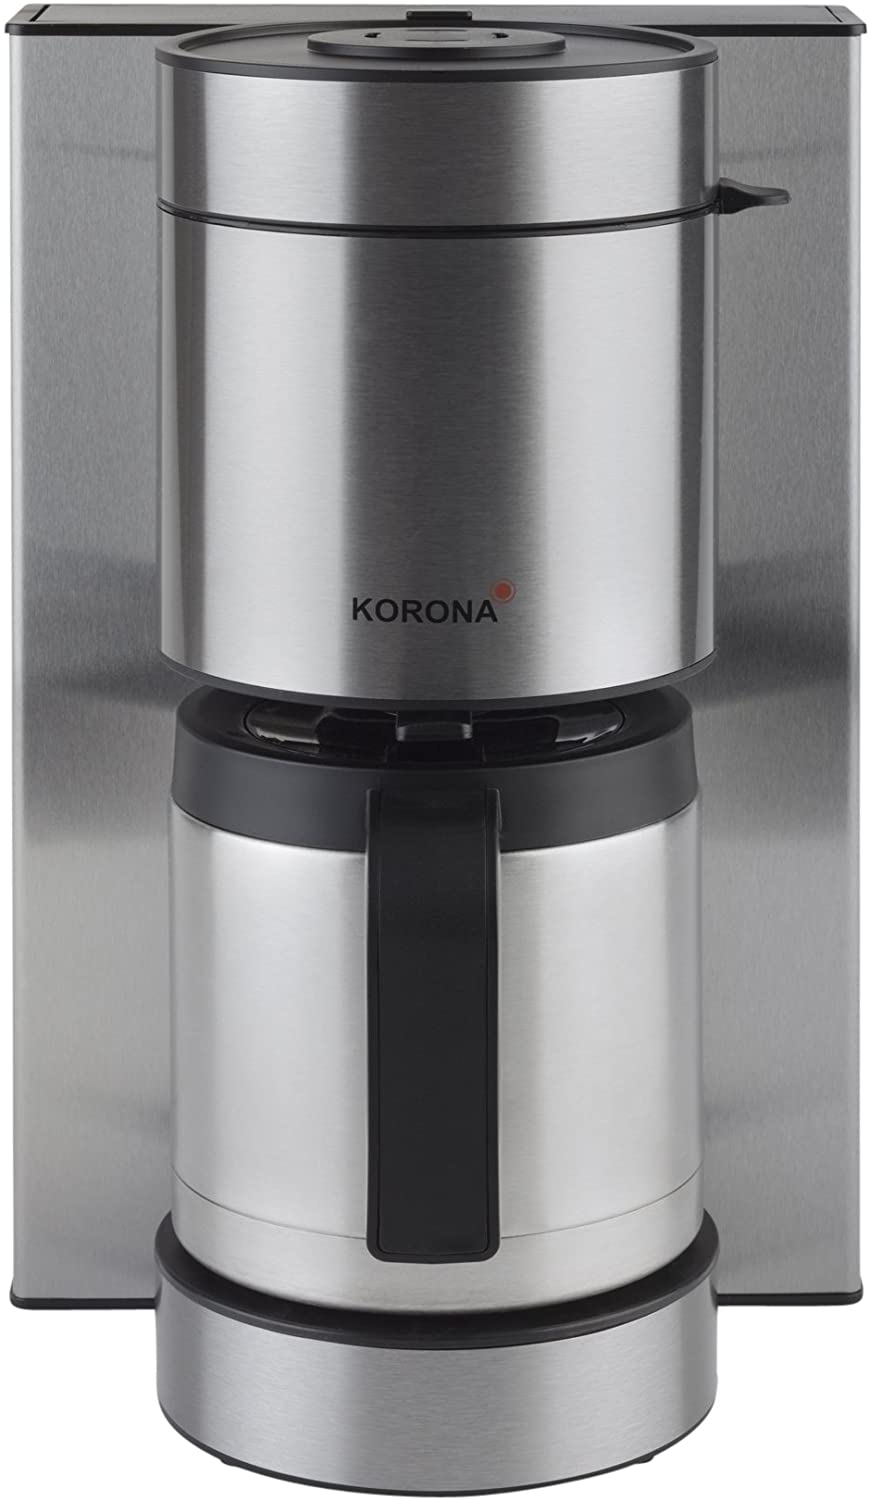 Korona 10281 Thermal Coffee Machine, Stainless Steel